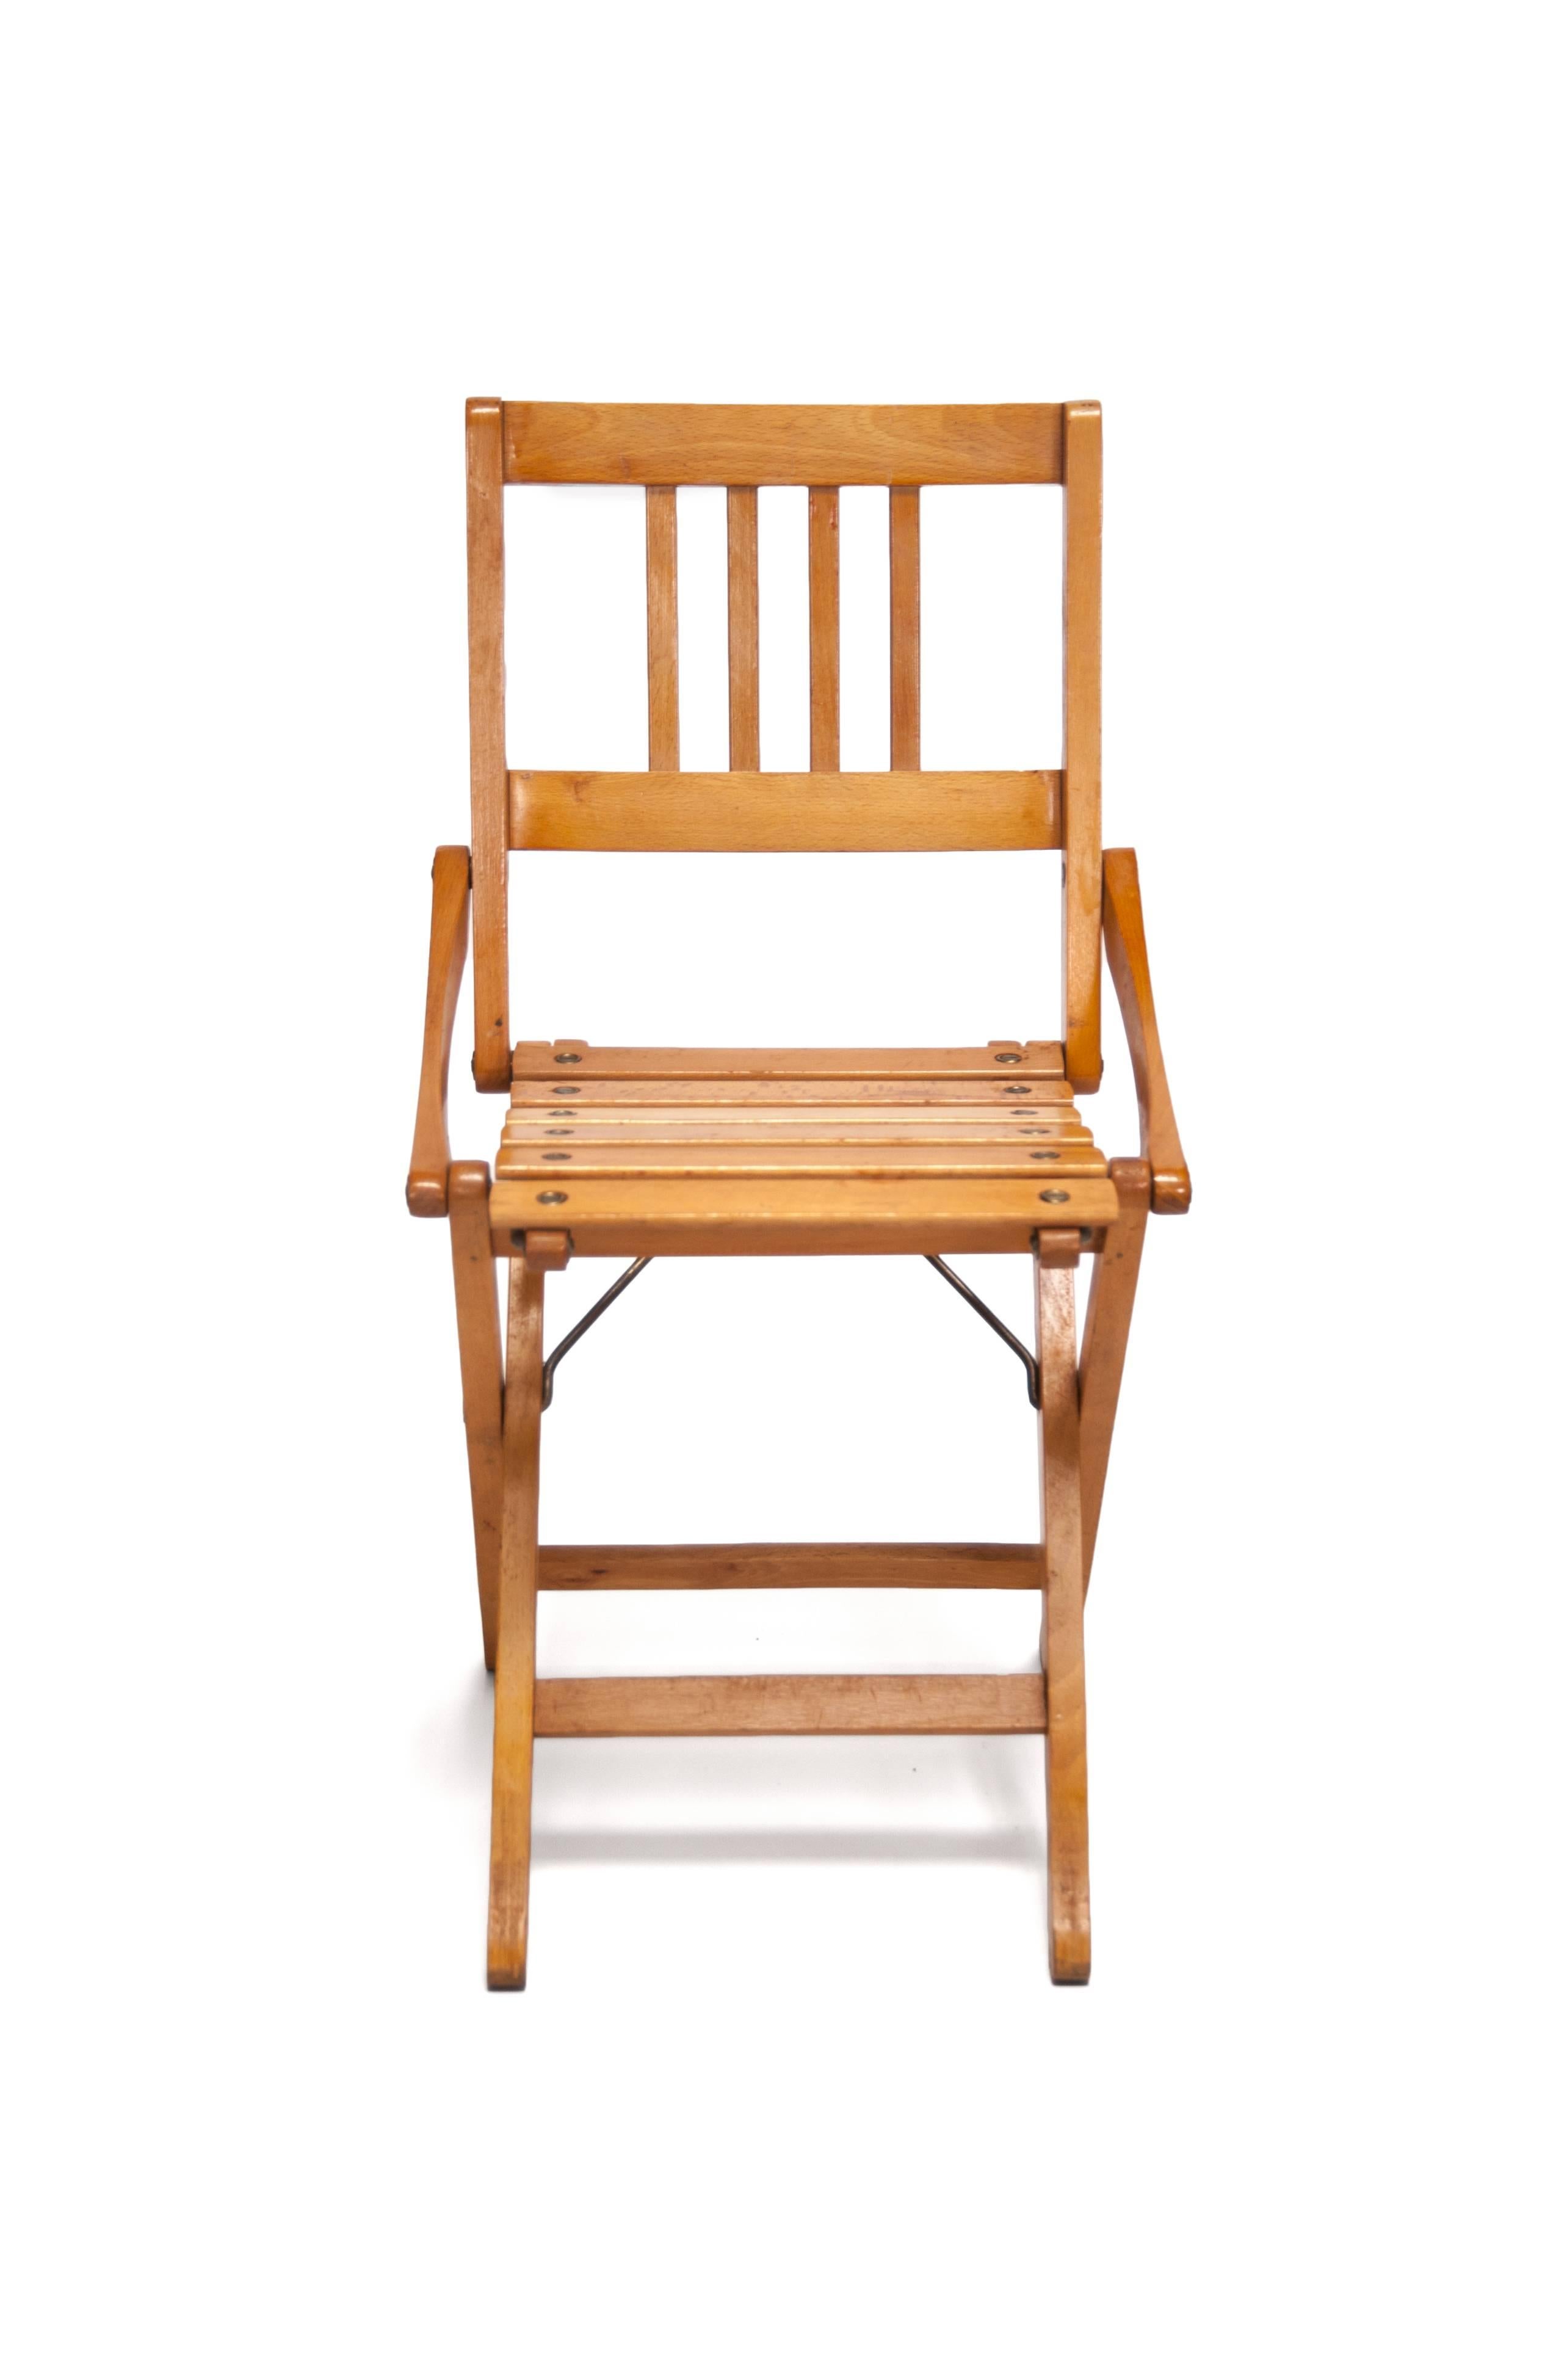 Brevetti Reguitti folding child chair by Fratelli Reguitti, Italy, 1940s

Brevetti Reguitti folding child chair
Fratelli Reguitti, Italy, 1940s
Maple wood
Measures: H 25.5 in, W 12.25 in, D 14.75 in (seat H 14.5 in).